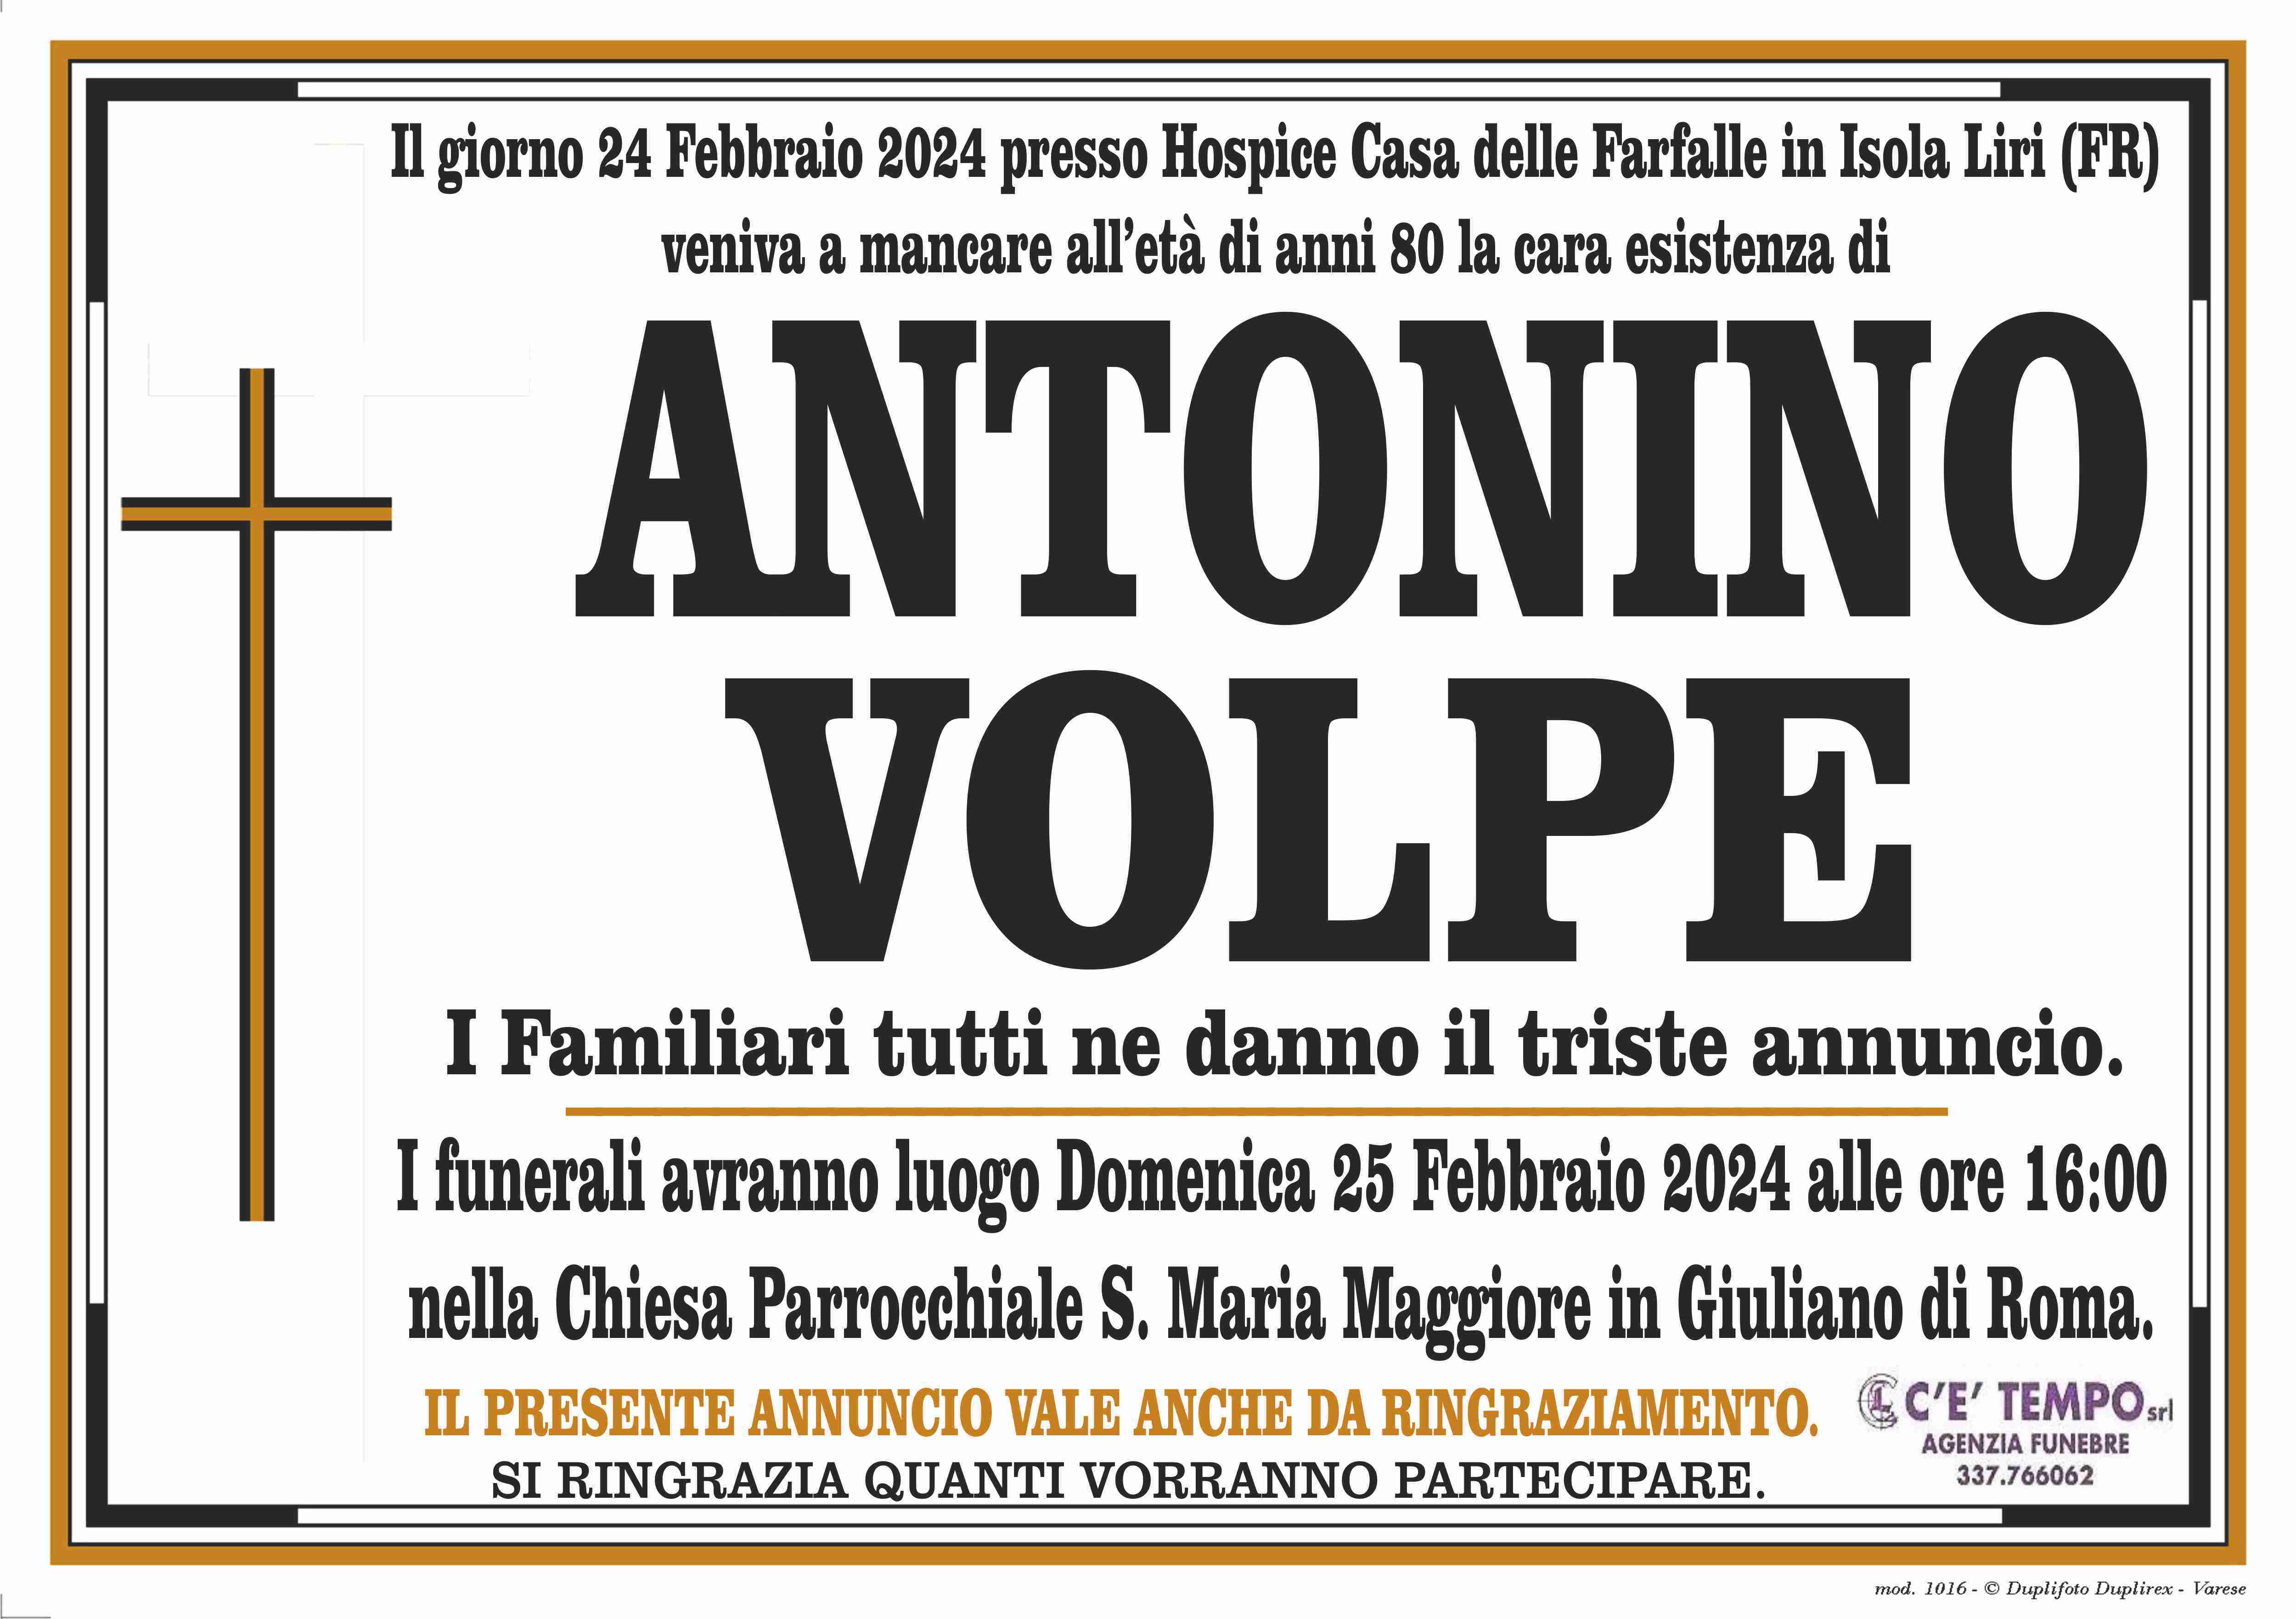 Antonino Volpe